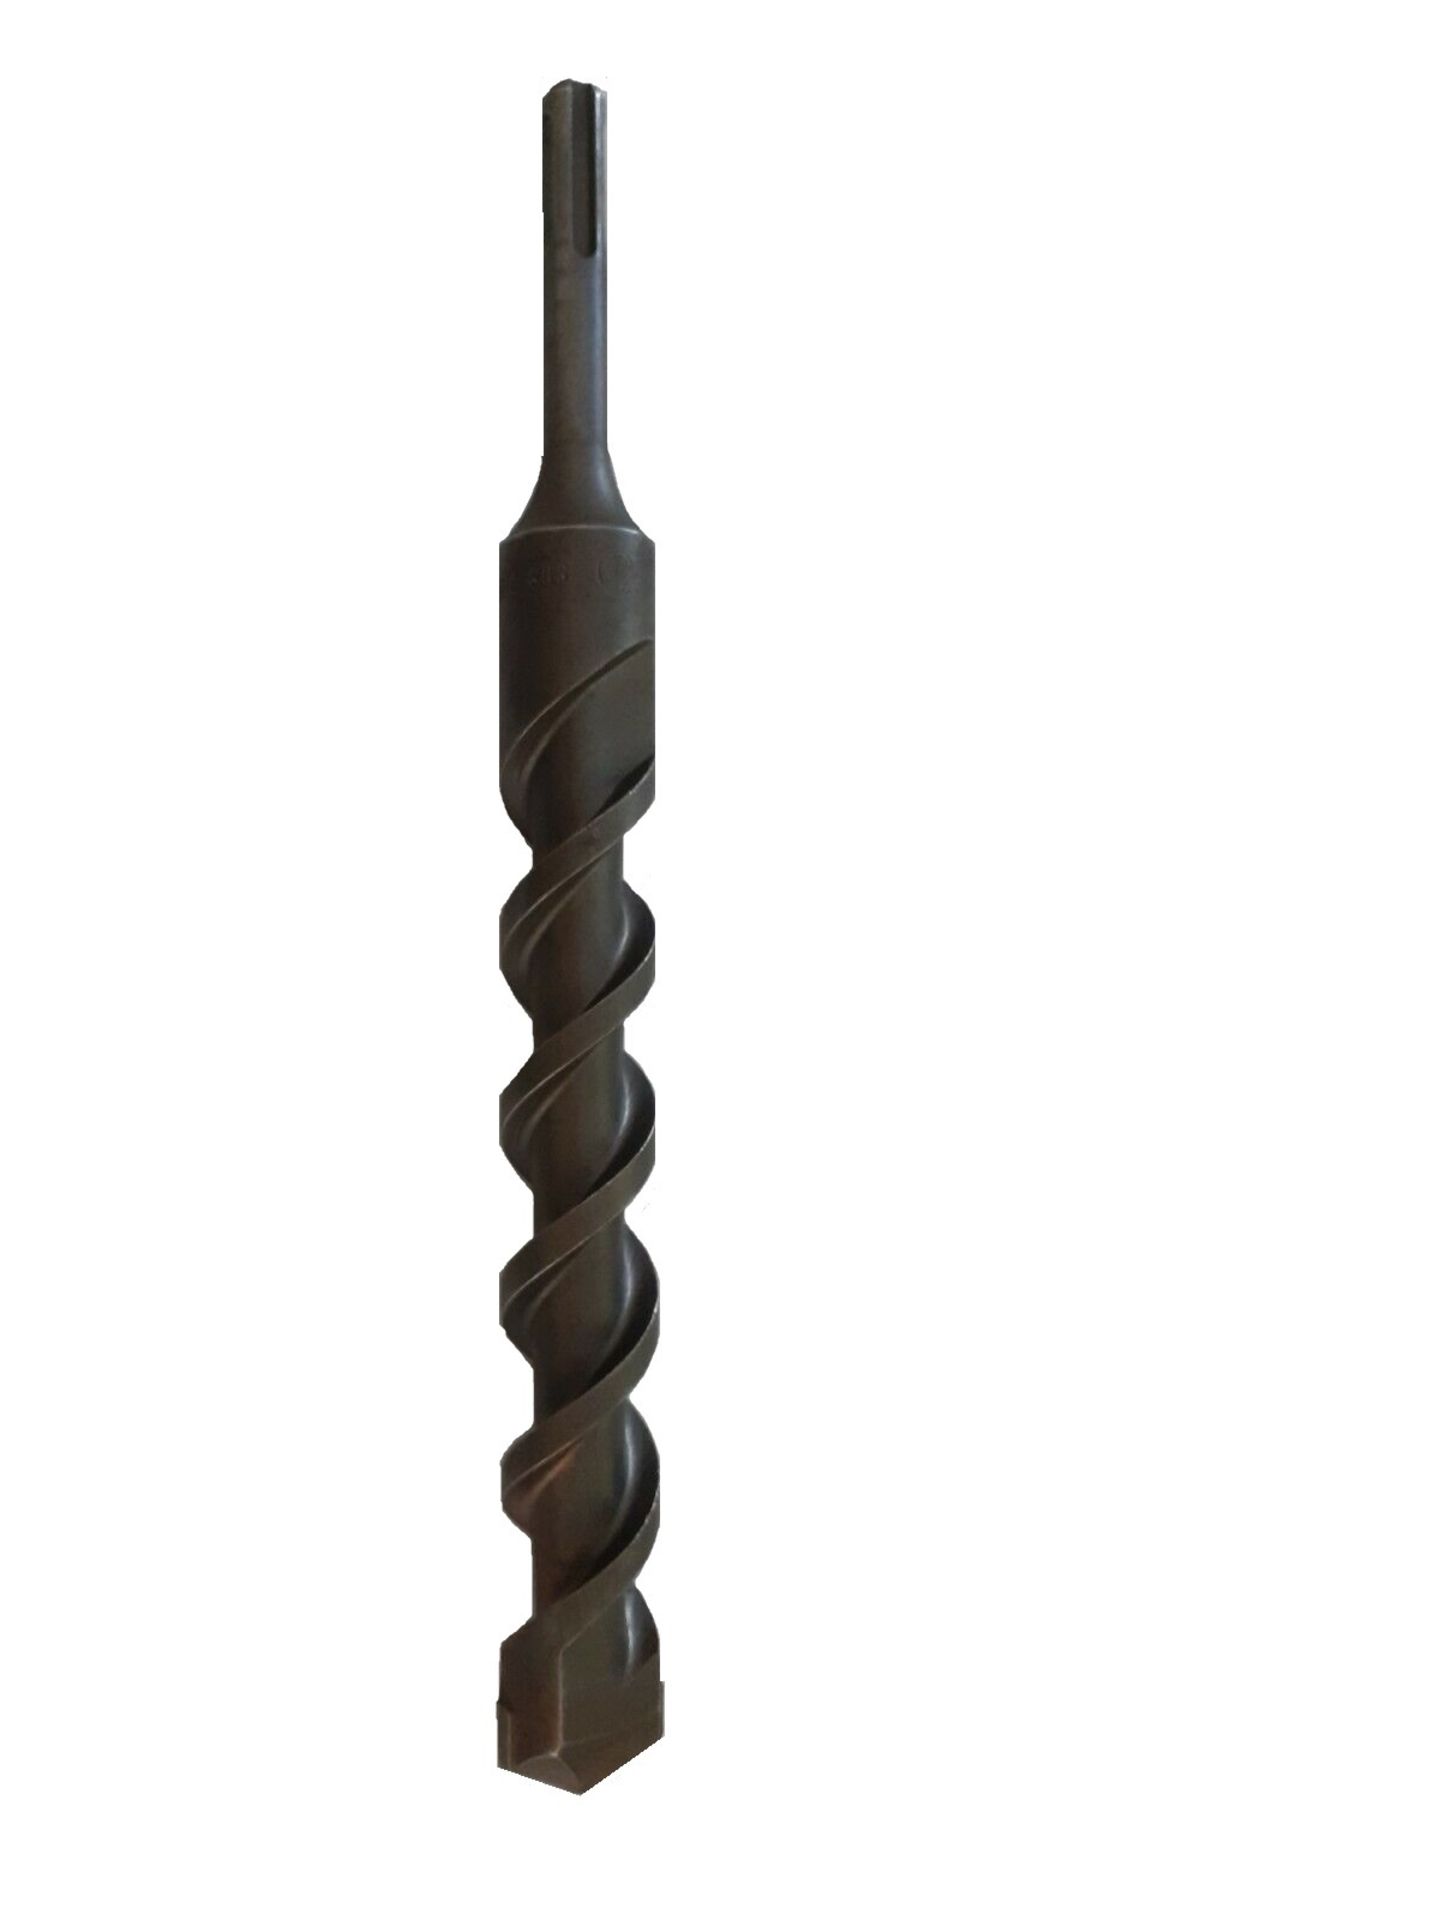 10 x Thorsman 25 Mm x 250 Mm SDS Plus Hammer Drill Bit-- Retail value £7.99 each